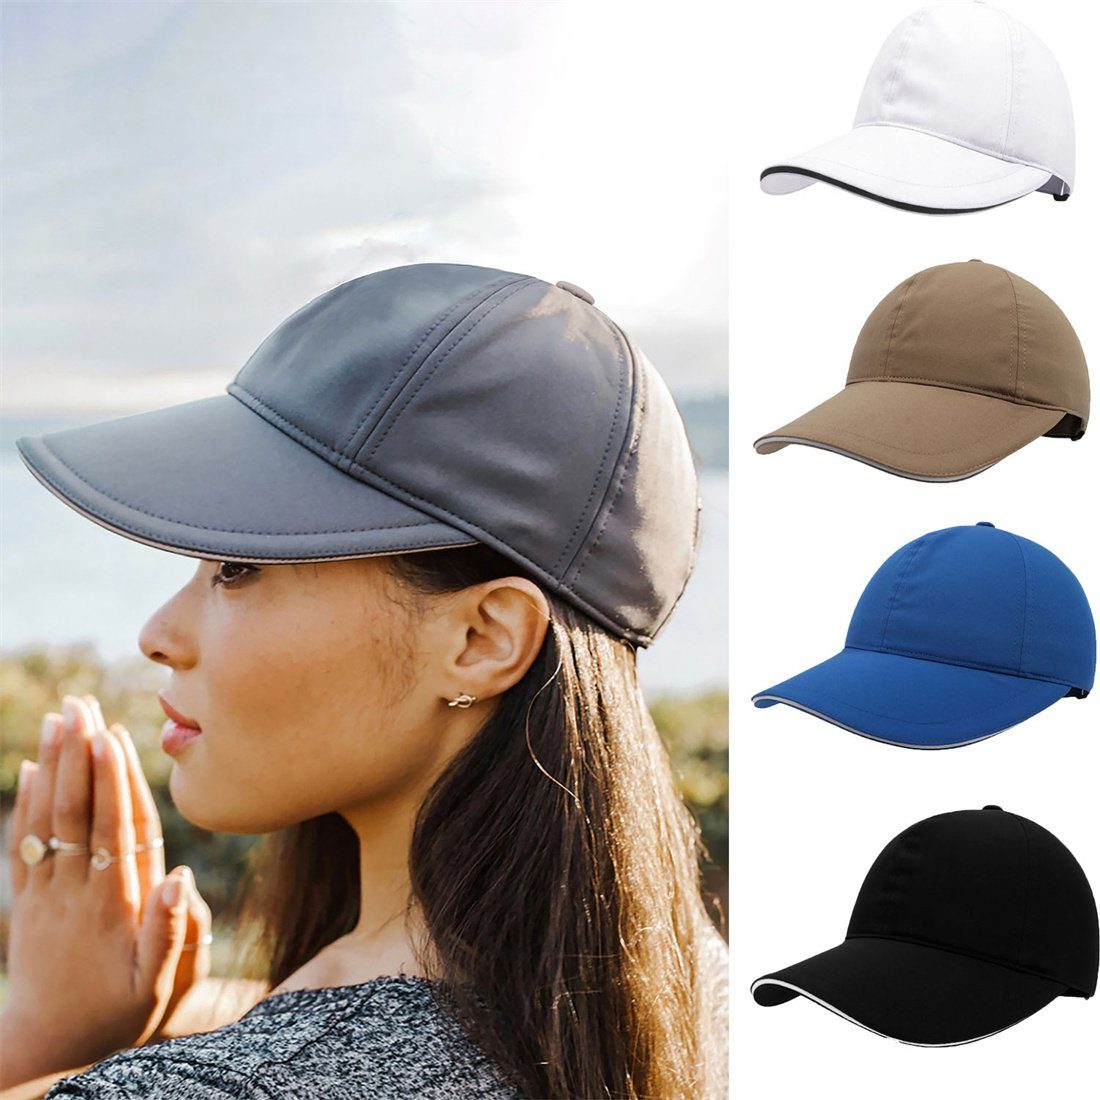 DÖRÖY Outdoor-Baseballkappe Kappe,Sonnenblende trocknende Schwarz Cap Frauen,schnell für Baseball